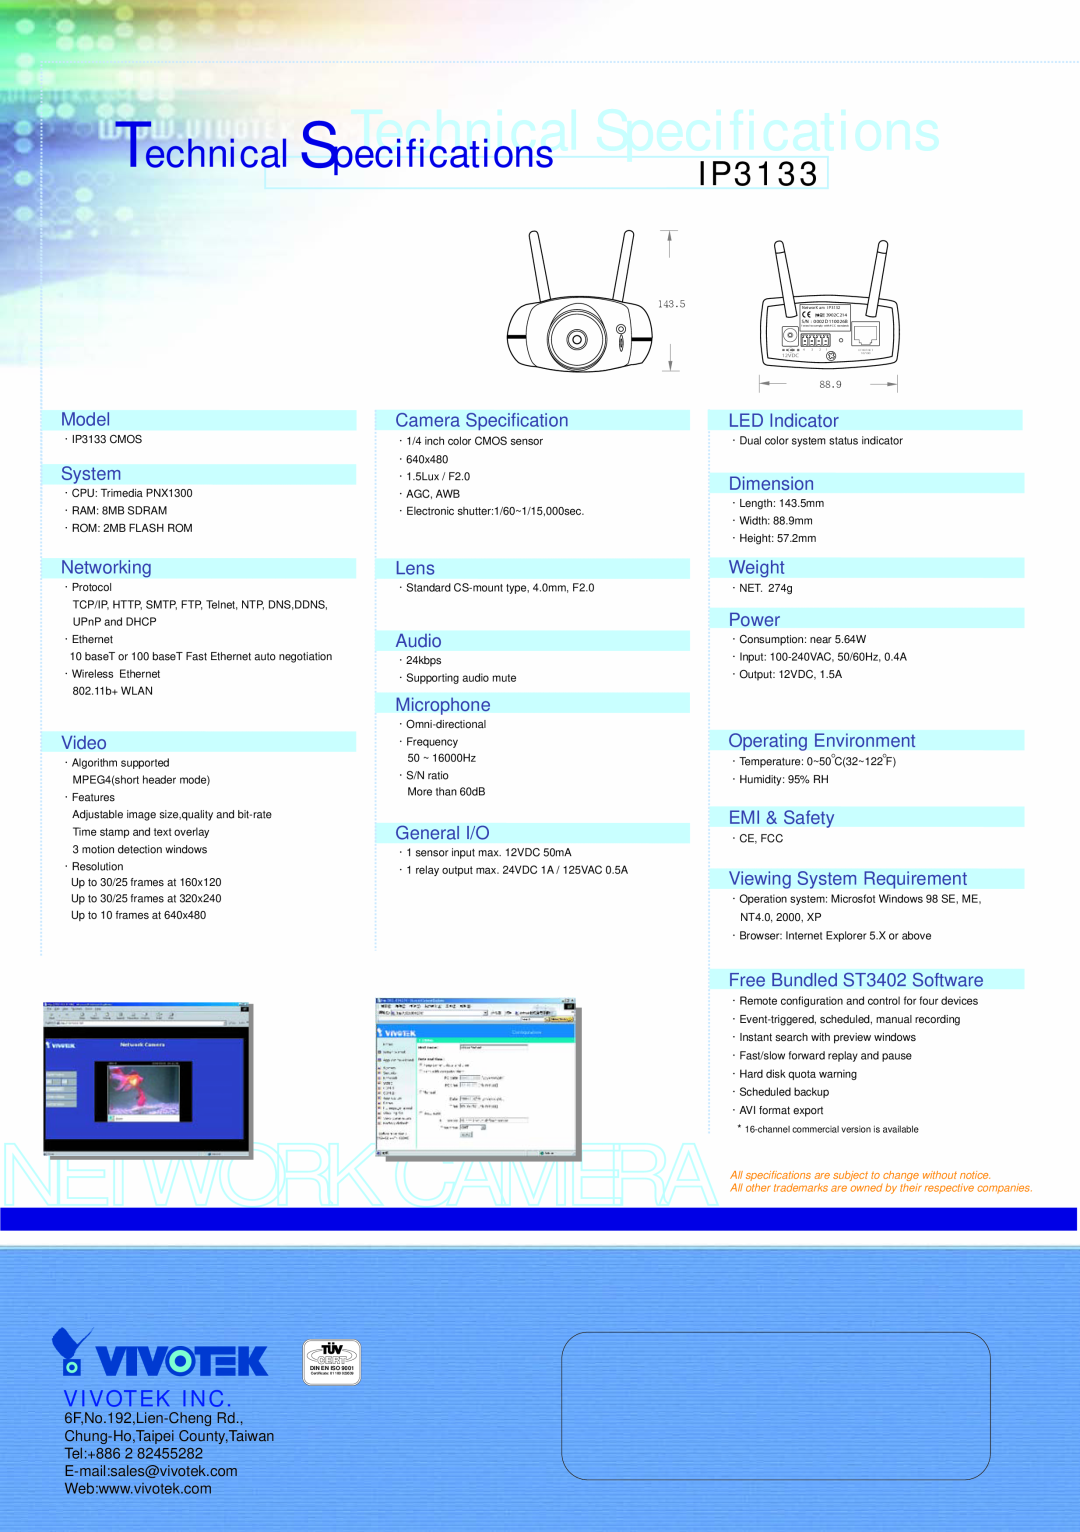 Vivotek manual Network Camera, T S Technical Specifications, echnical pecifications IP3133, Vivotek Inc 